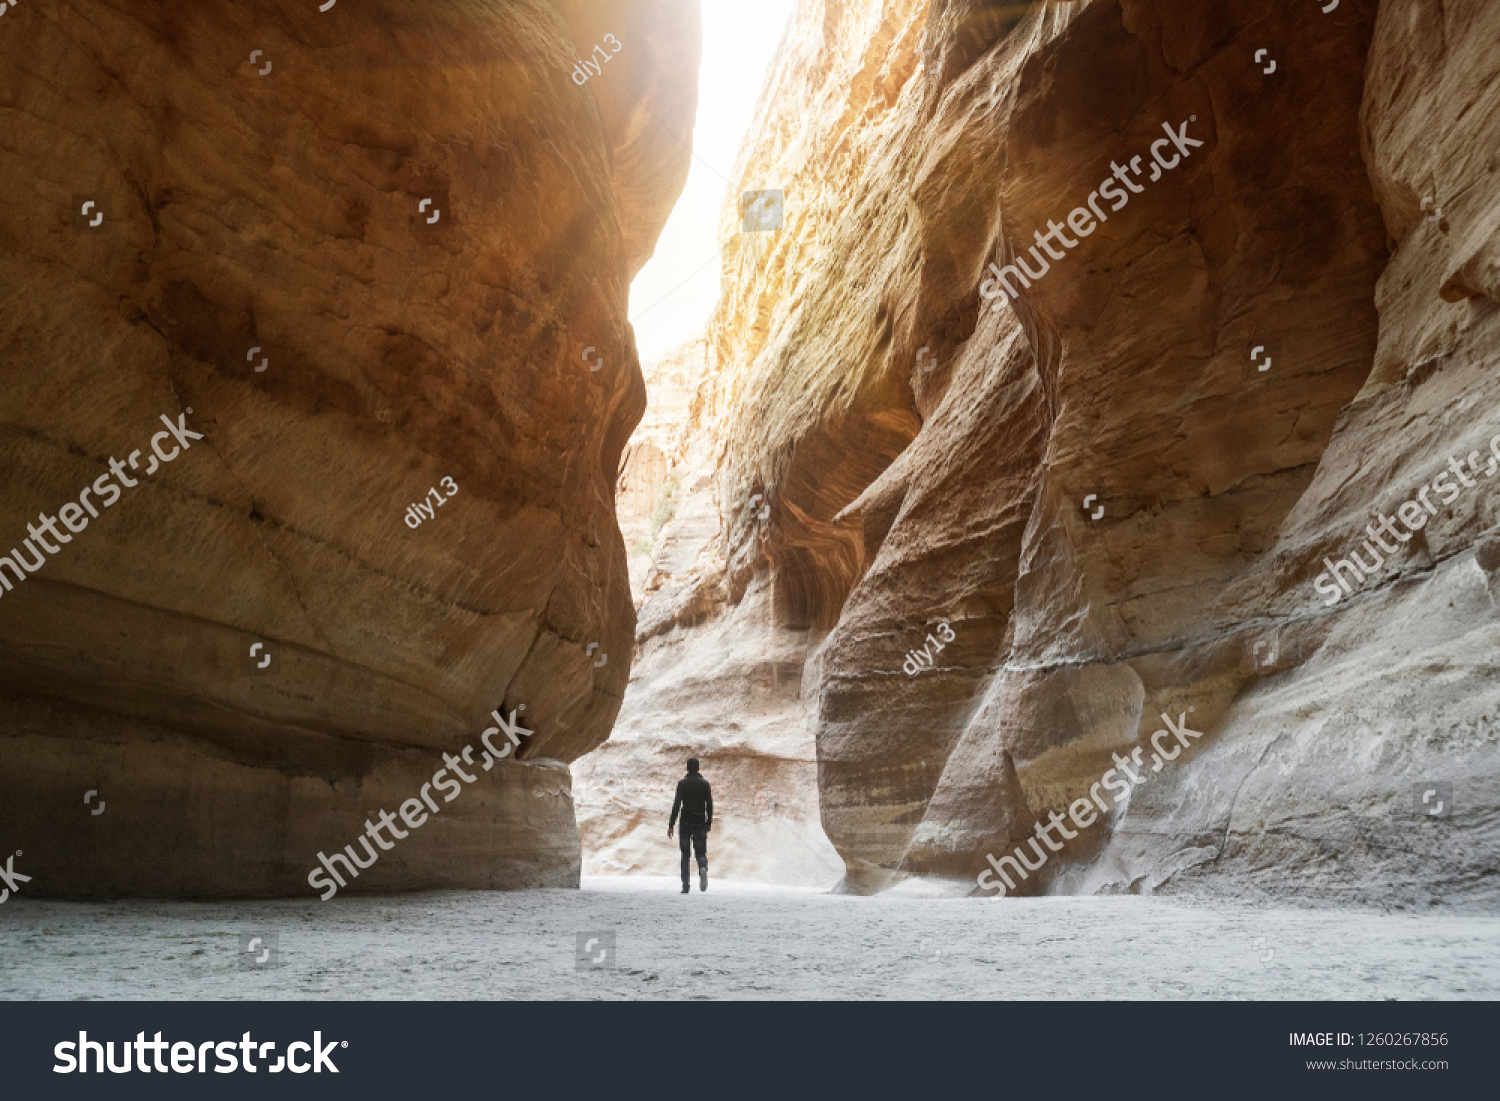 Tourist in narrow passage of rocks of Petra canyon in Jordan. UNESCO World Heritage Site. Way through Siq gorge to stone city Petra. lonely man walking among the rocks. sunlight breaks through rocks. #1260267856